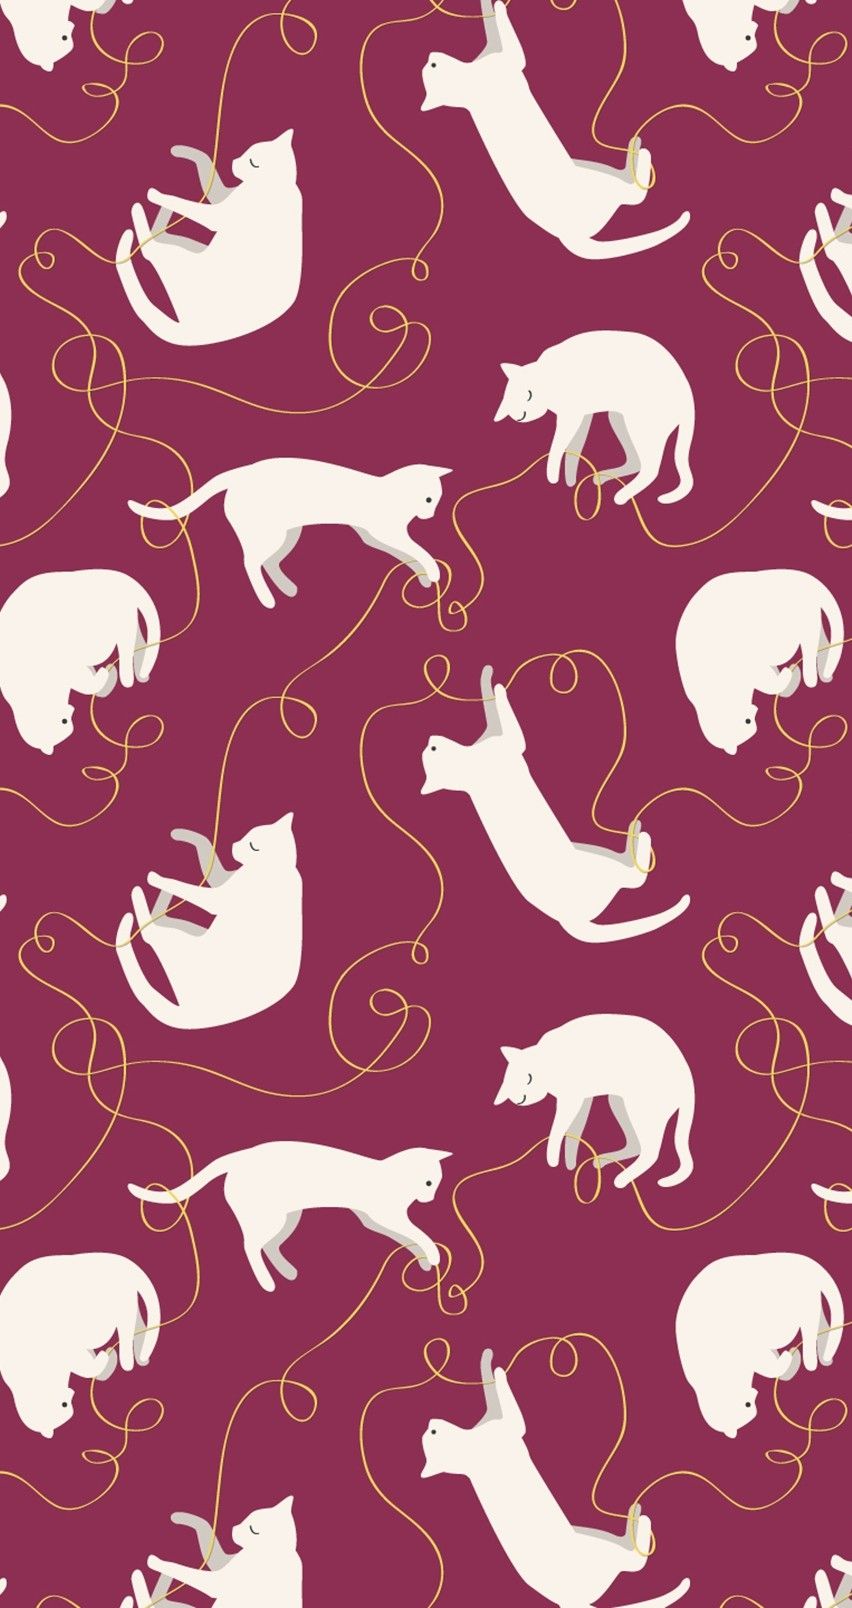 cat pattern wallpaper,pattern,design,wrapping paper,illustration,rug